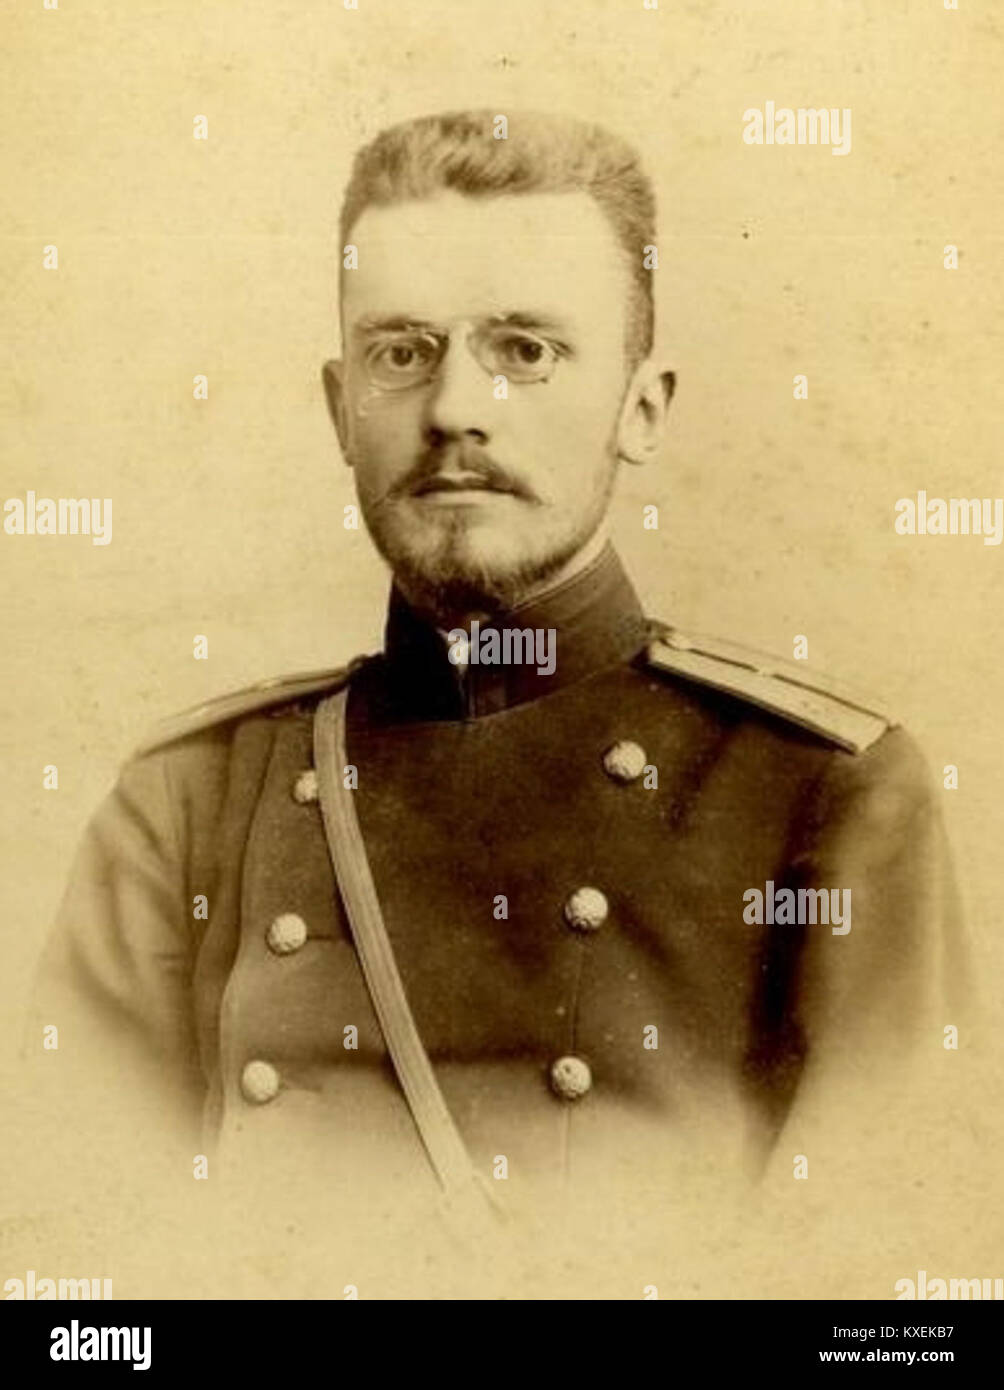 Alexander Koliubakin in Izmaylovsky Guards' uniform Stock Photo